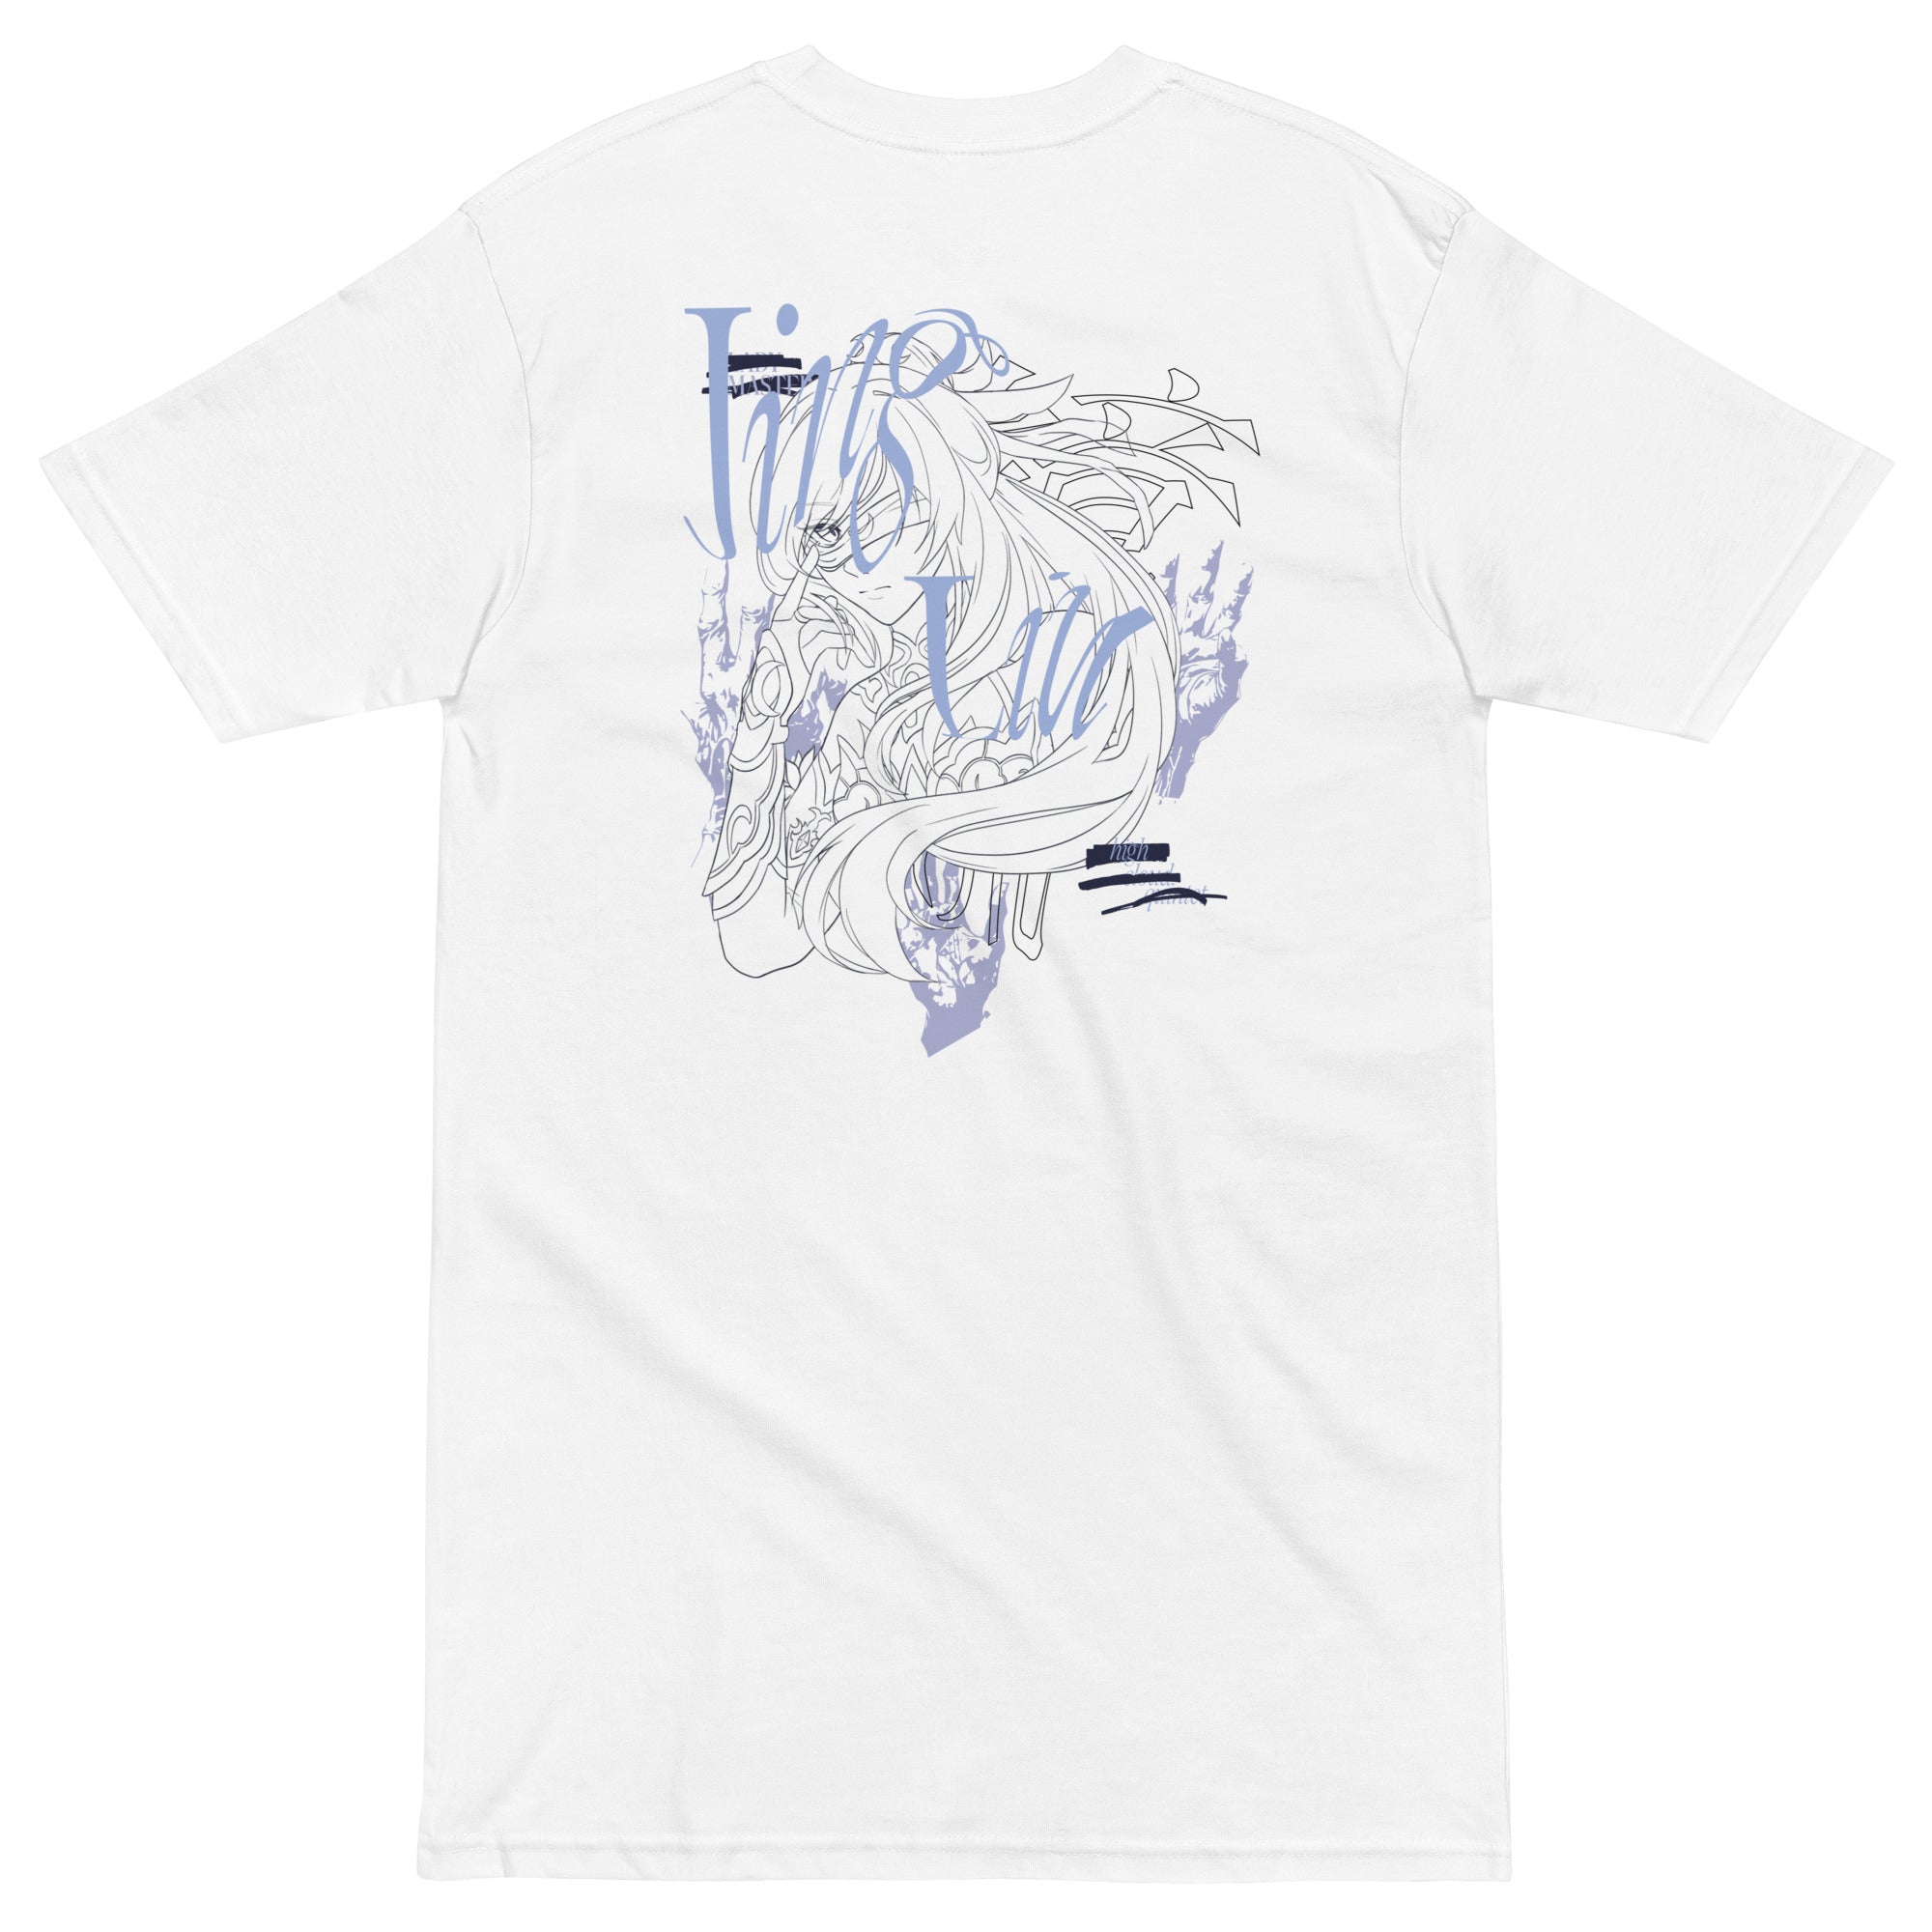 FINE LINE • t-shirt - Jackler - anime-inspired streetwear - anime clothing